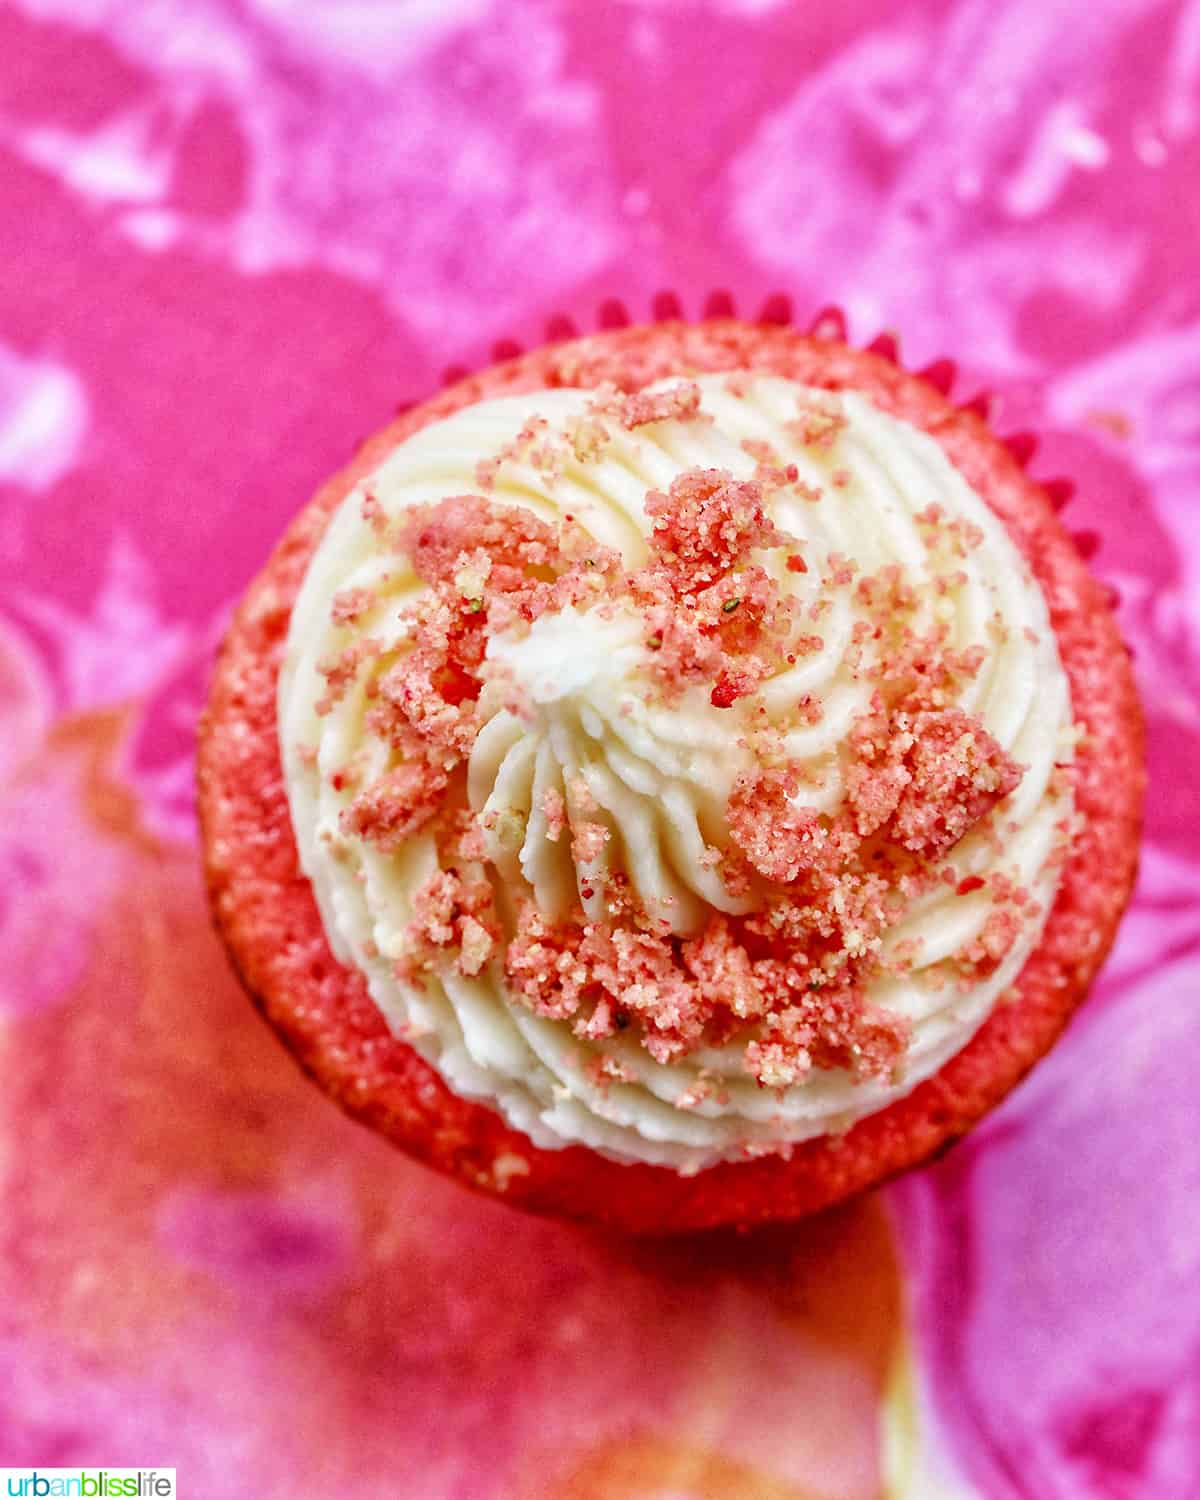 strawberry crunch cupcake on a bright pink swirled background.